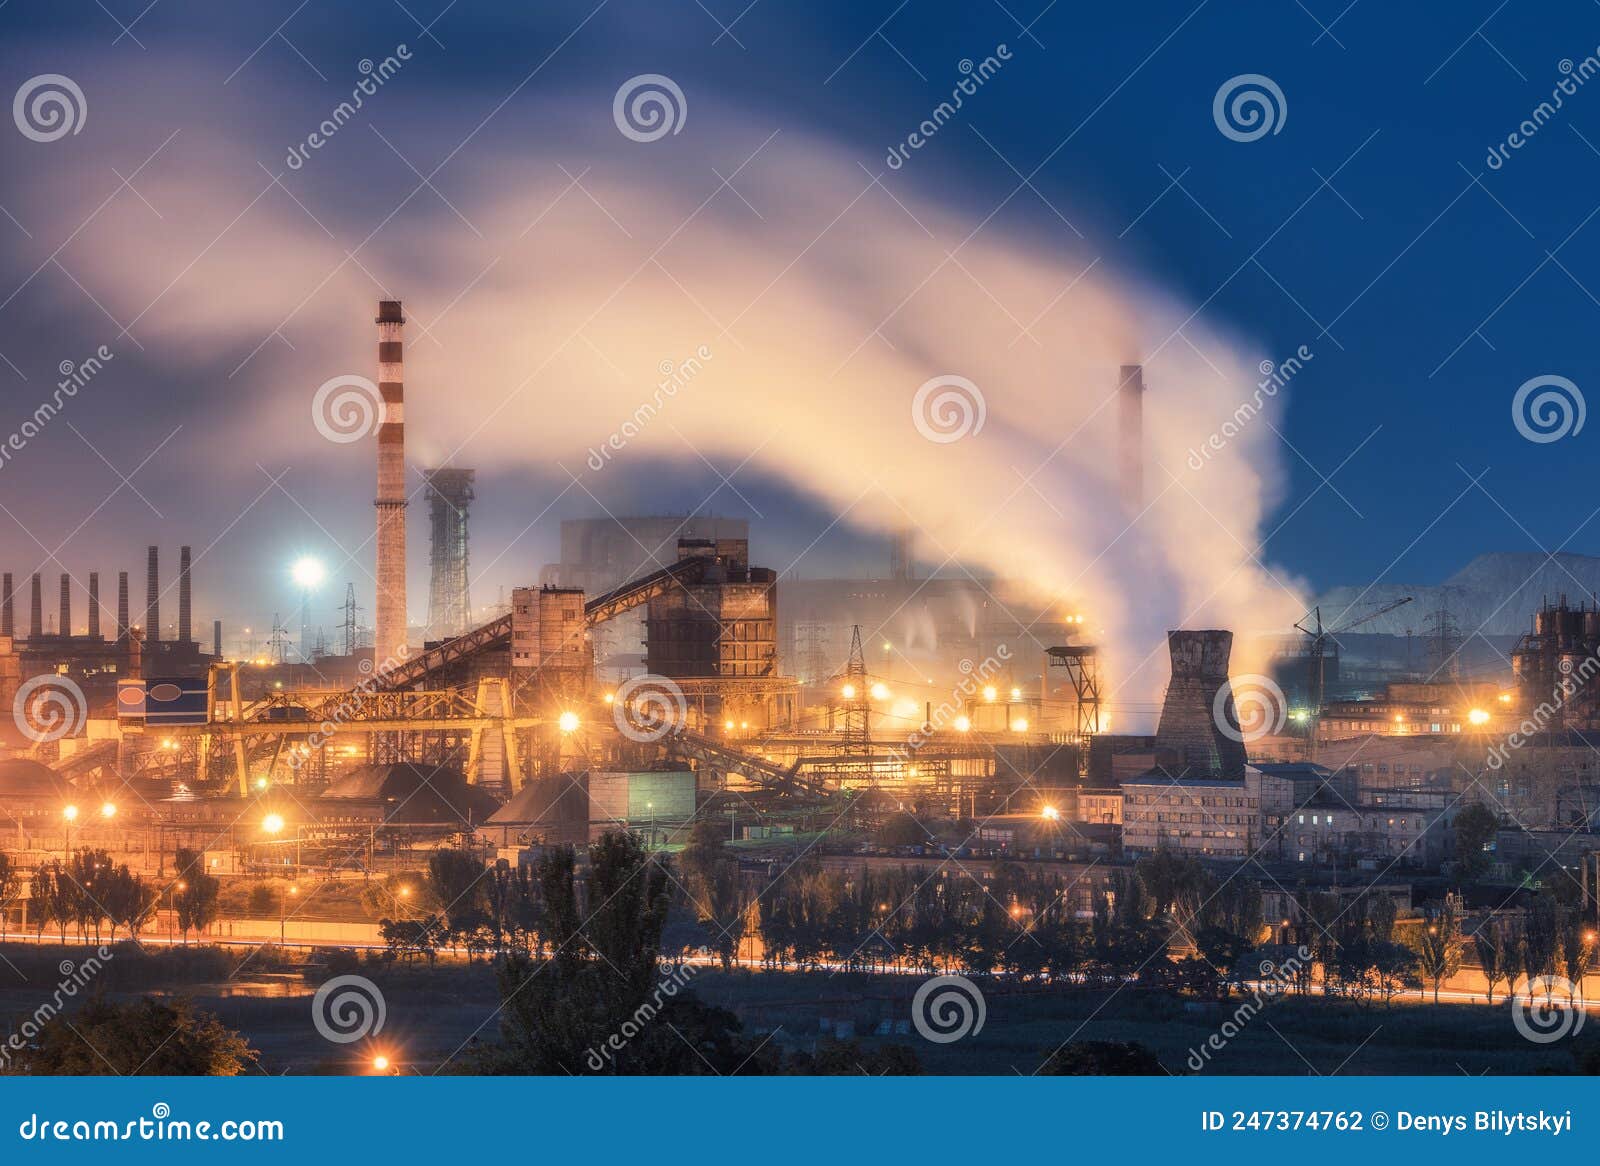 azovstal in mariupol, ukraine before war. steel plant at night